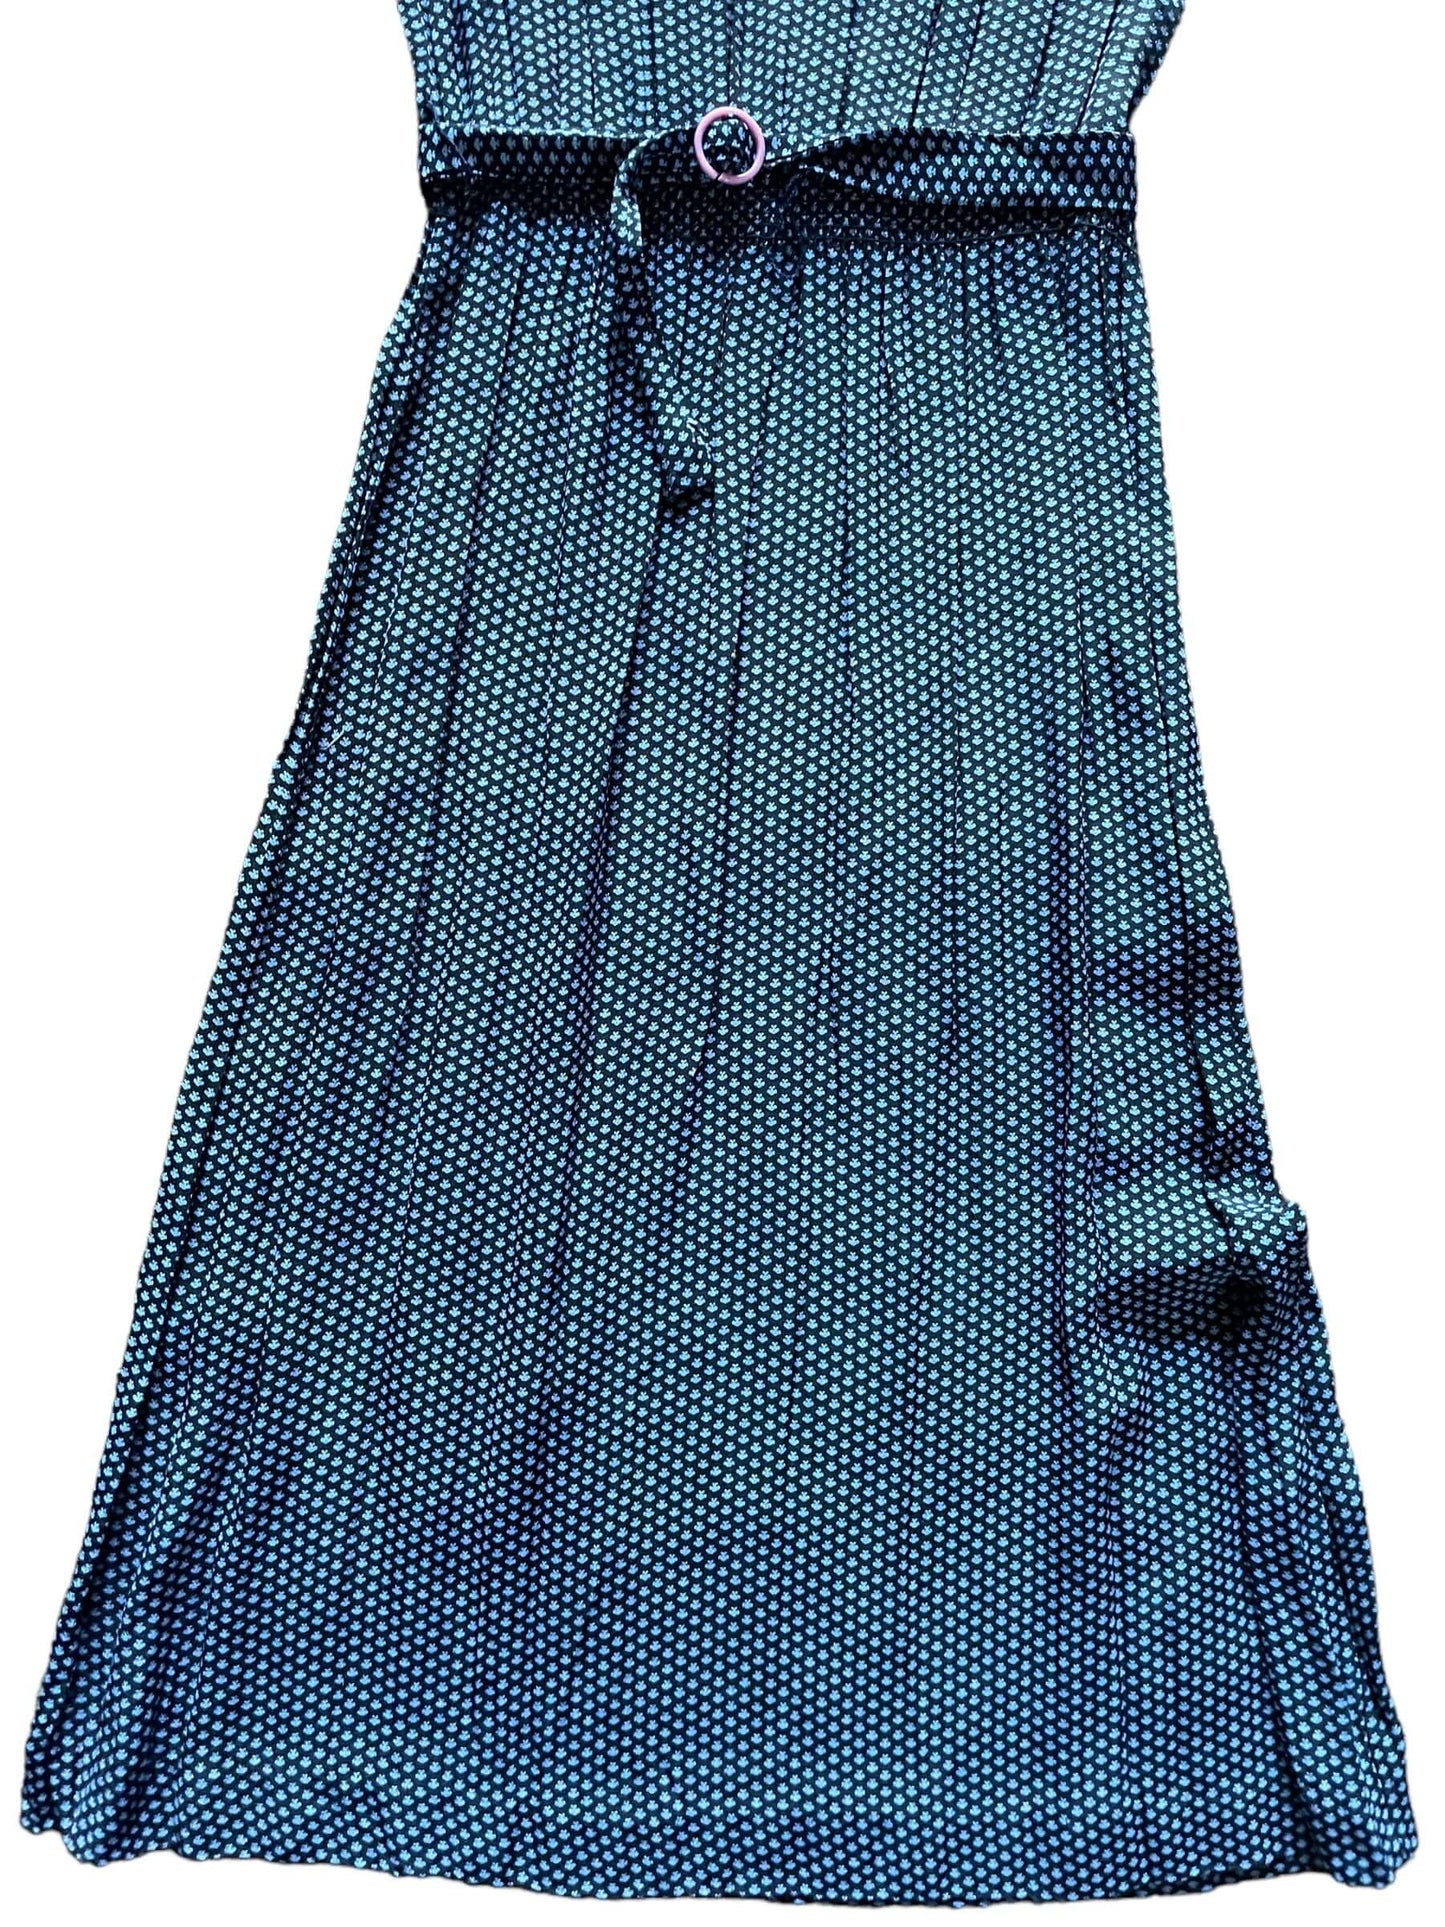 Front skirt view of Vintage 70s Does 40s Popi Dress |  Barn Owl Vintage Dresses | Seattle Vintage Ladies Clothing